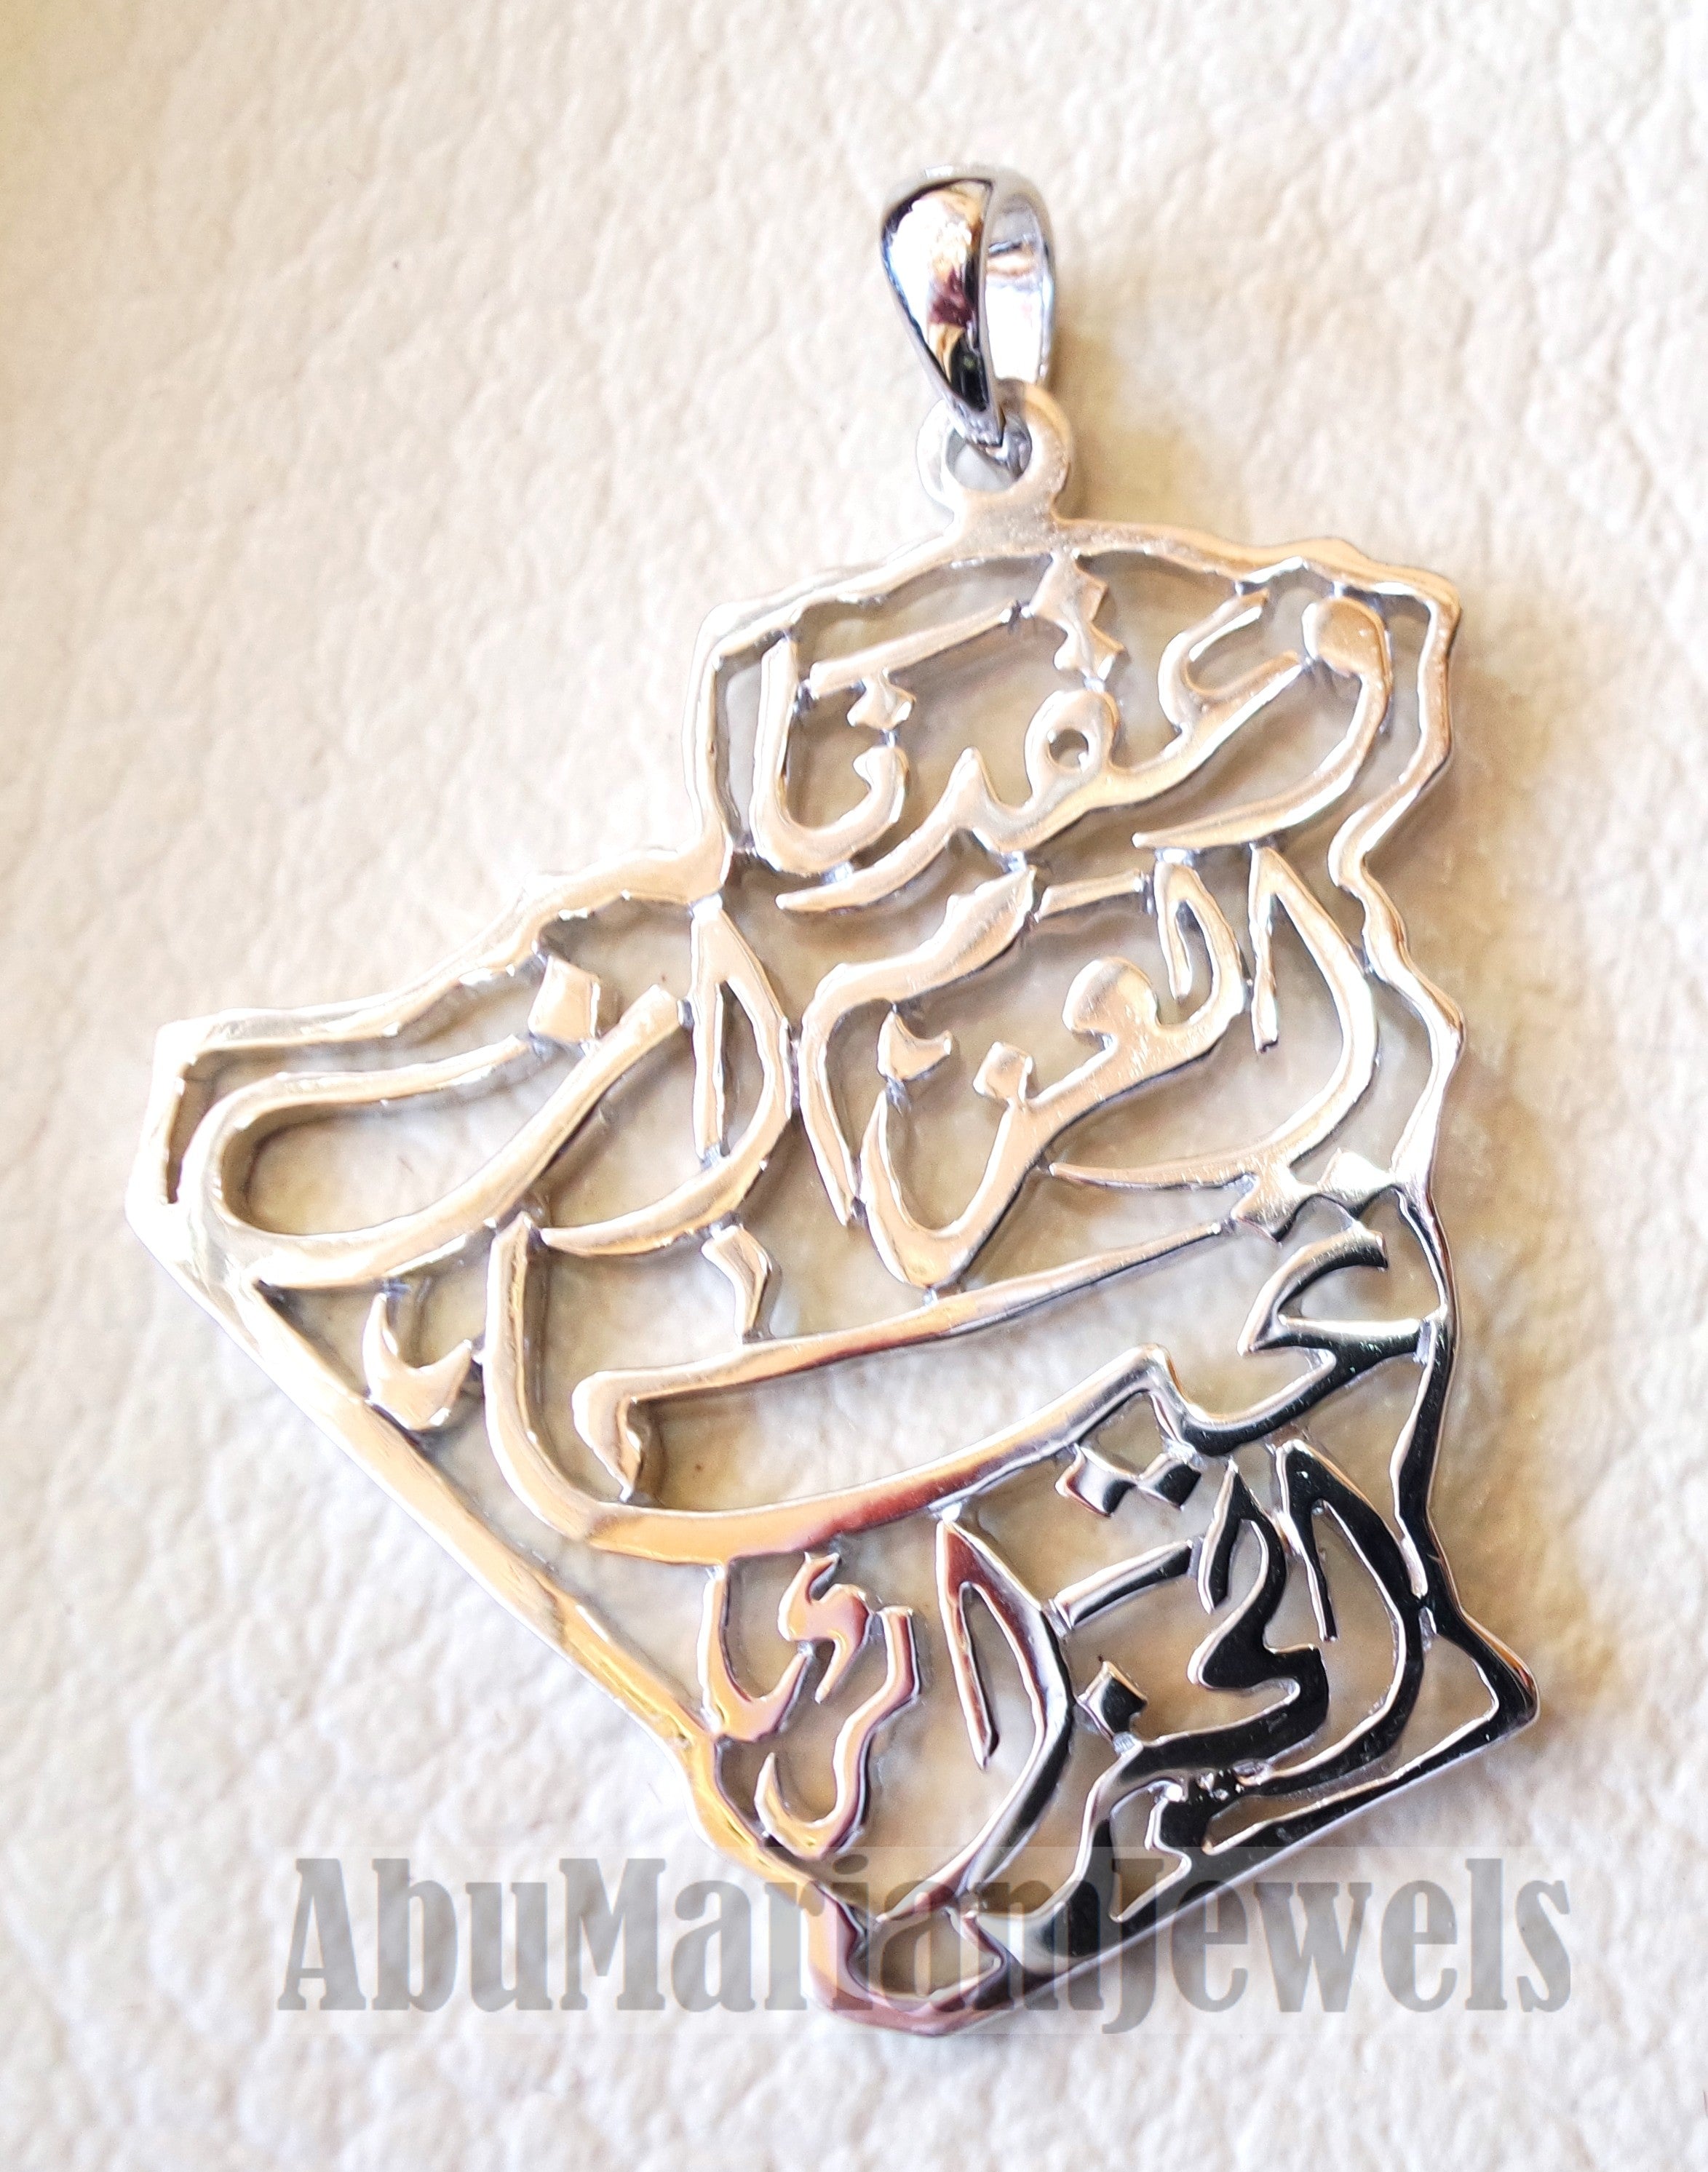 Algeria map Carte de l'Algérie pendant with famous national anthem verse sterling silver 925 jewelry Arabic fast shipping خريطة الجزائر